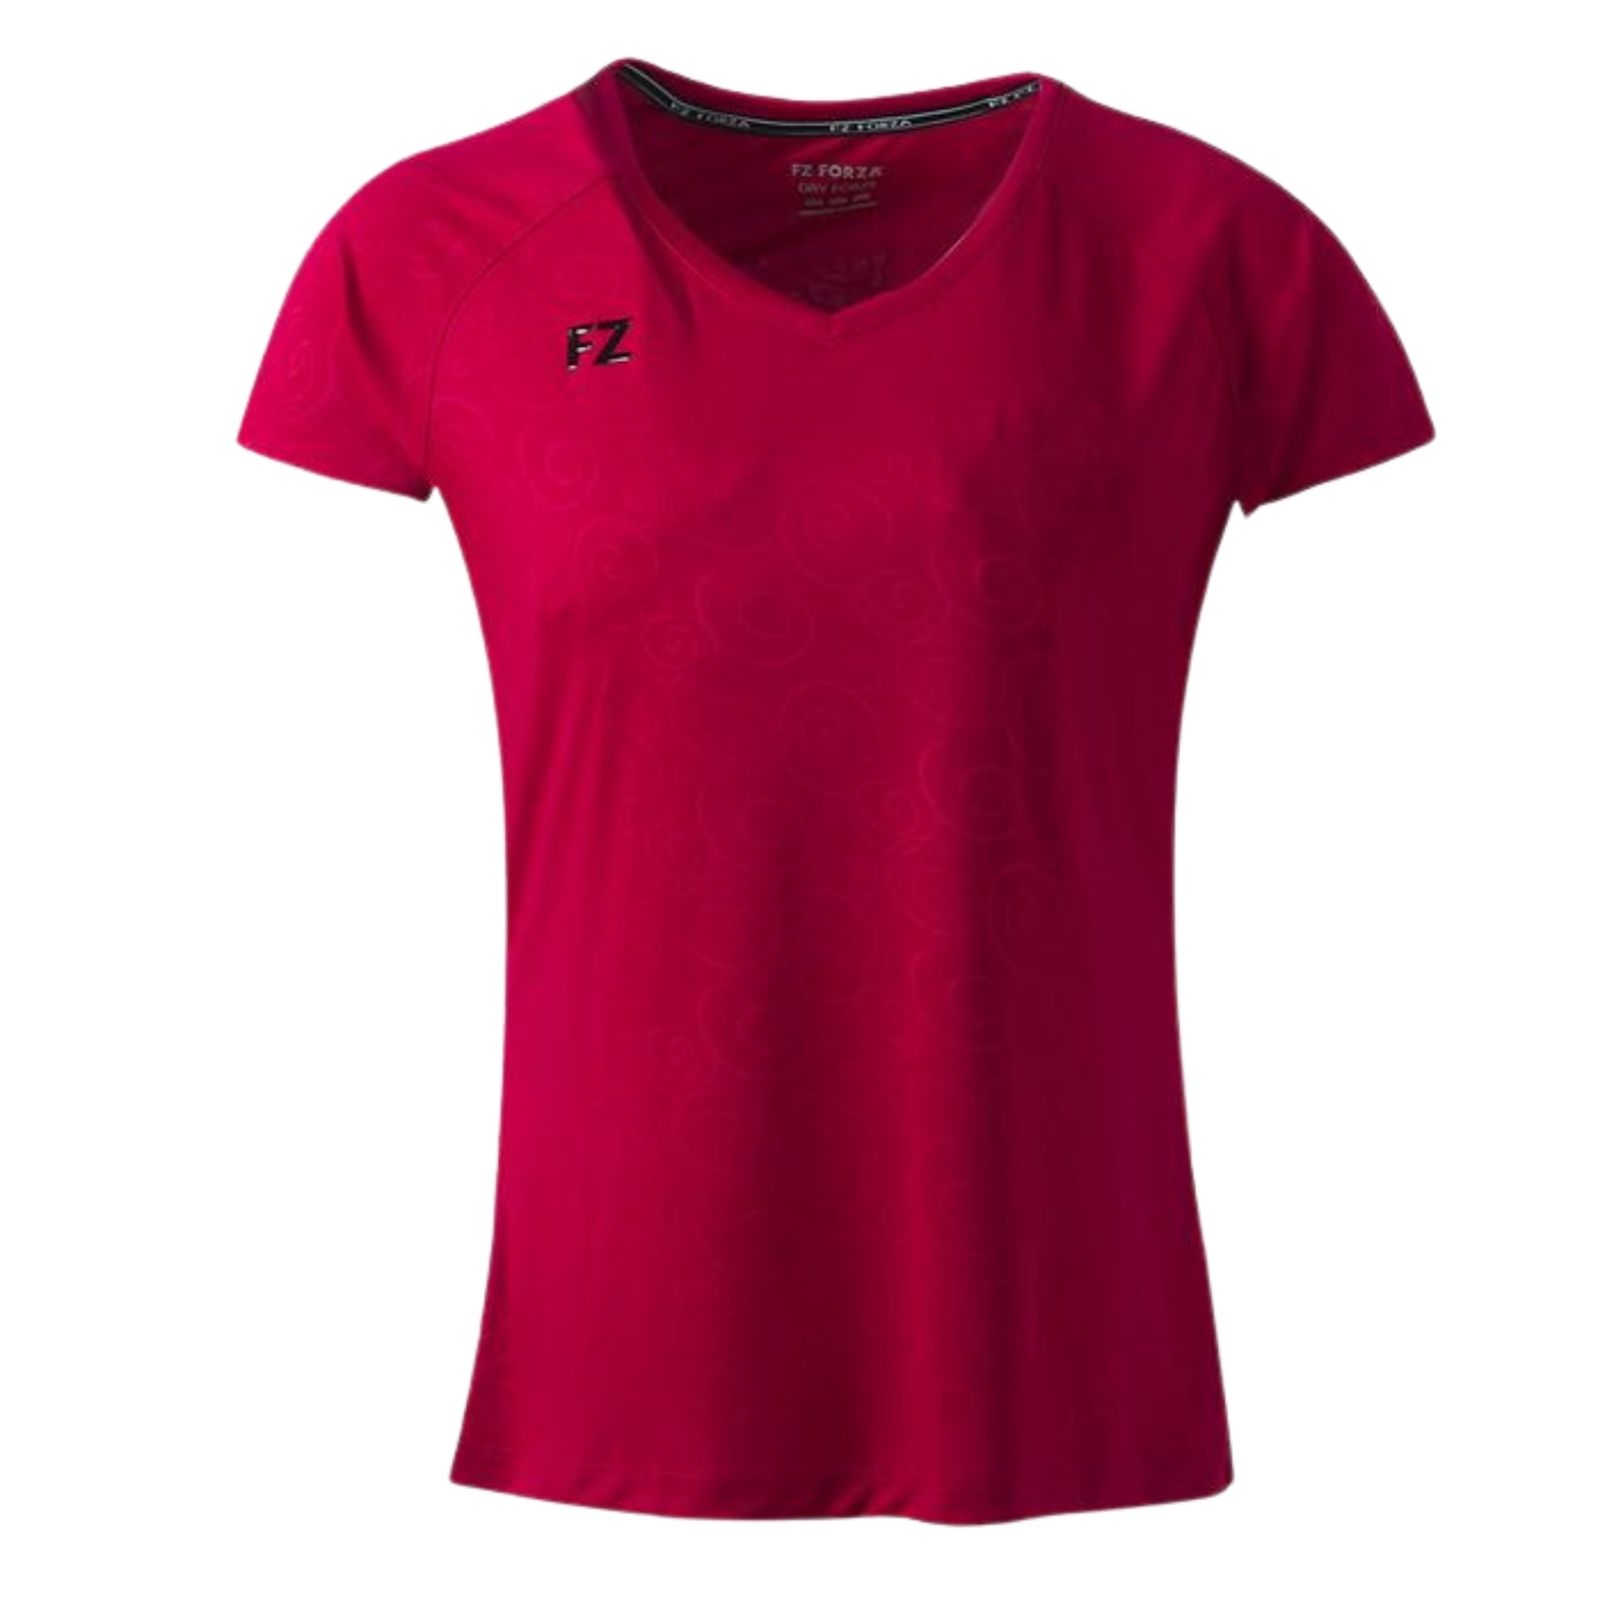 Forza Leoni T-Shirt Womens Persian Red | Fantastic tee!